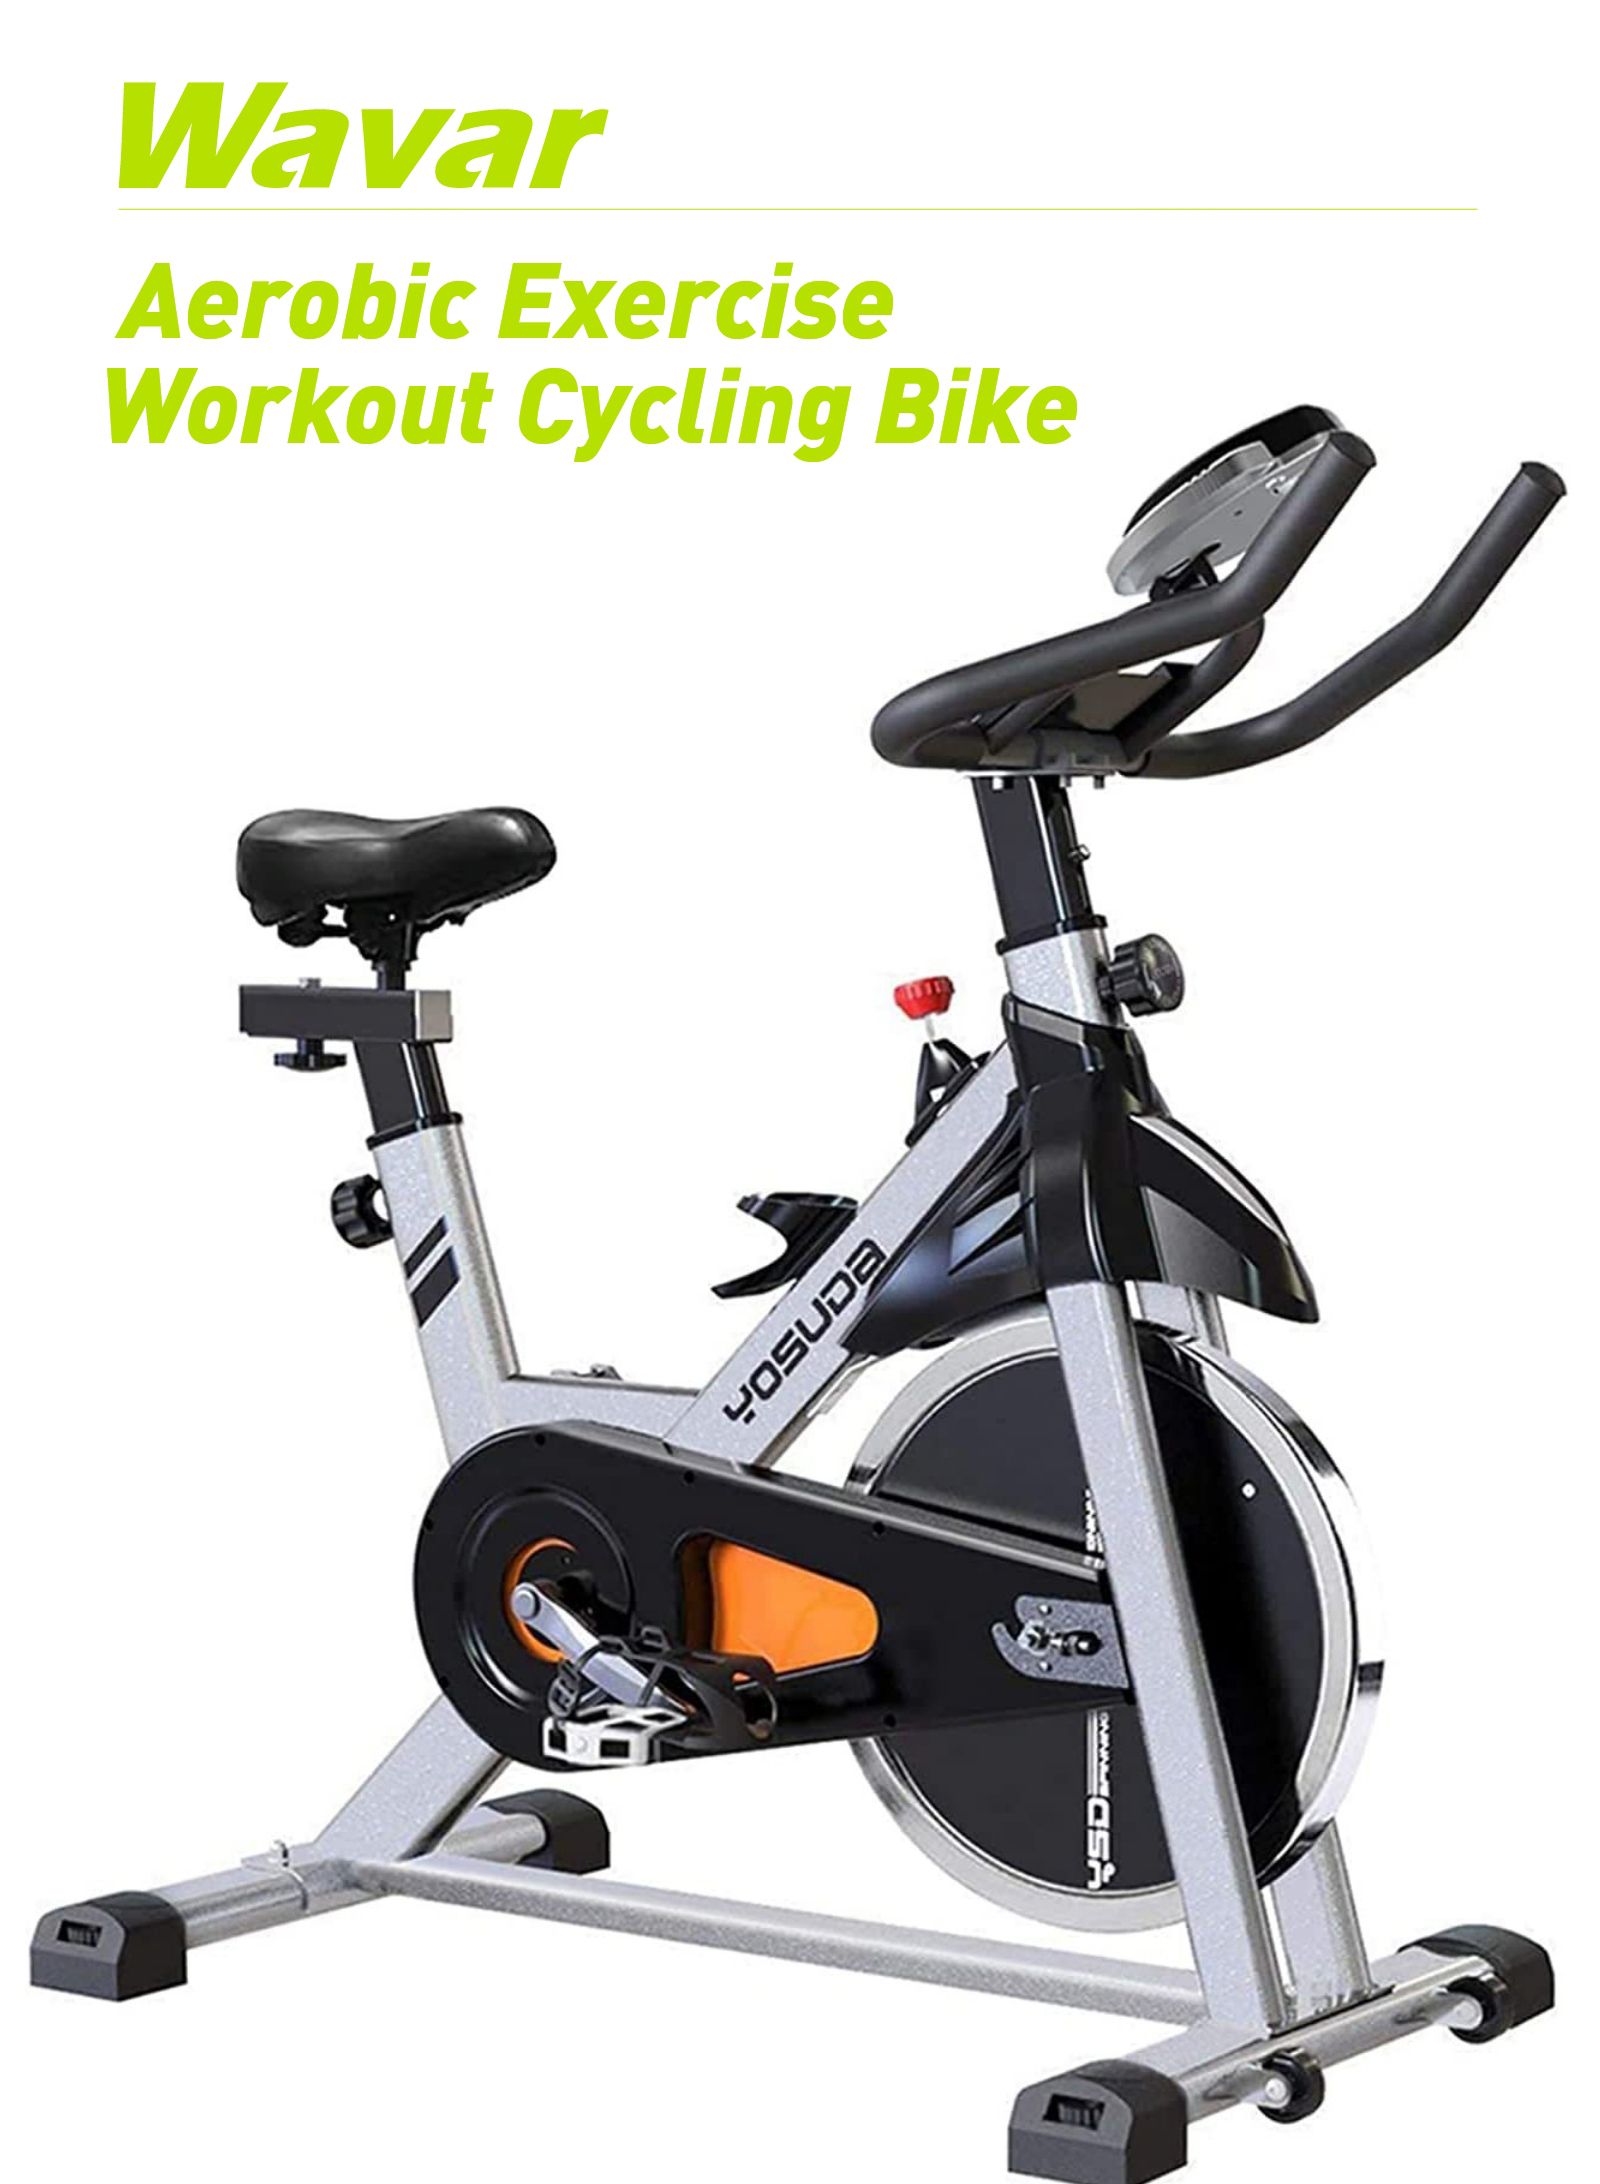 Aerobic Exercise Workout Cycling Bike